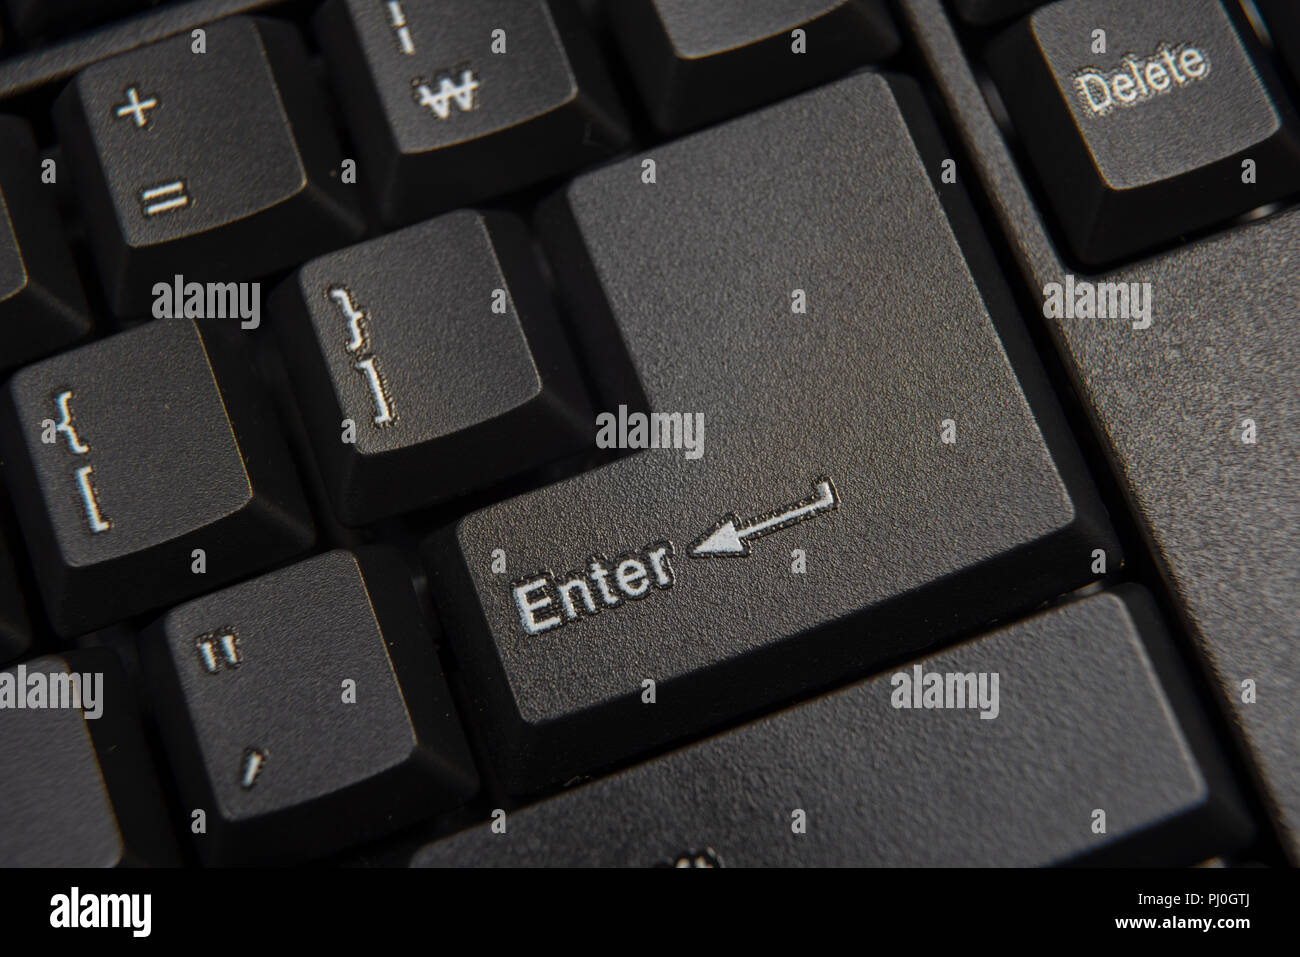 Black computer keyboard close-up. Focused on 'Enter' key. Stock Photo